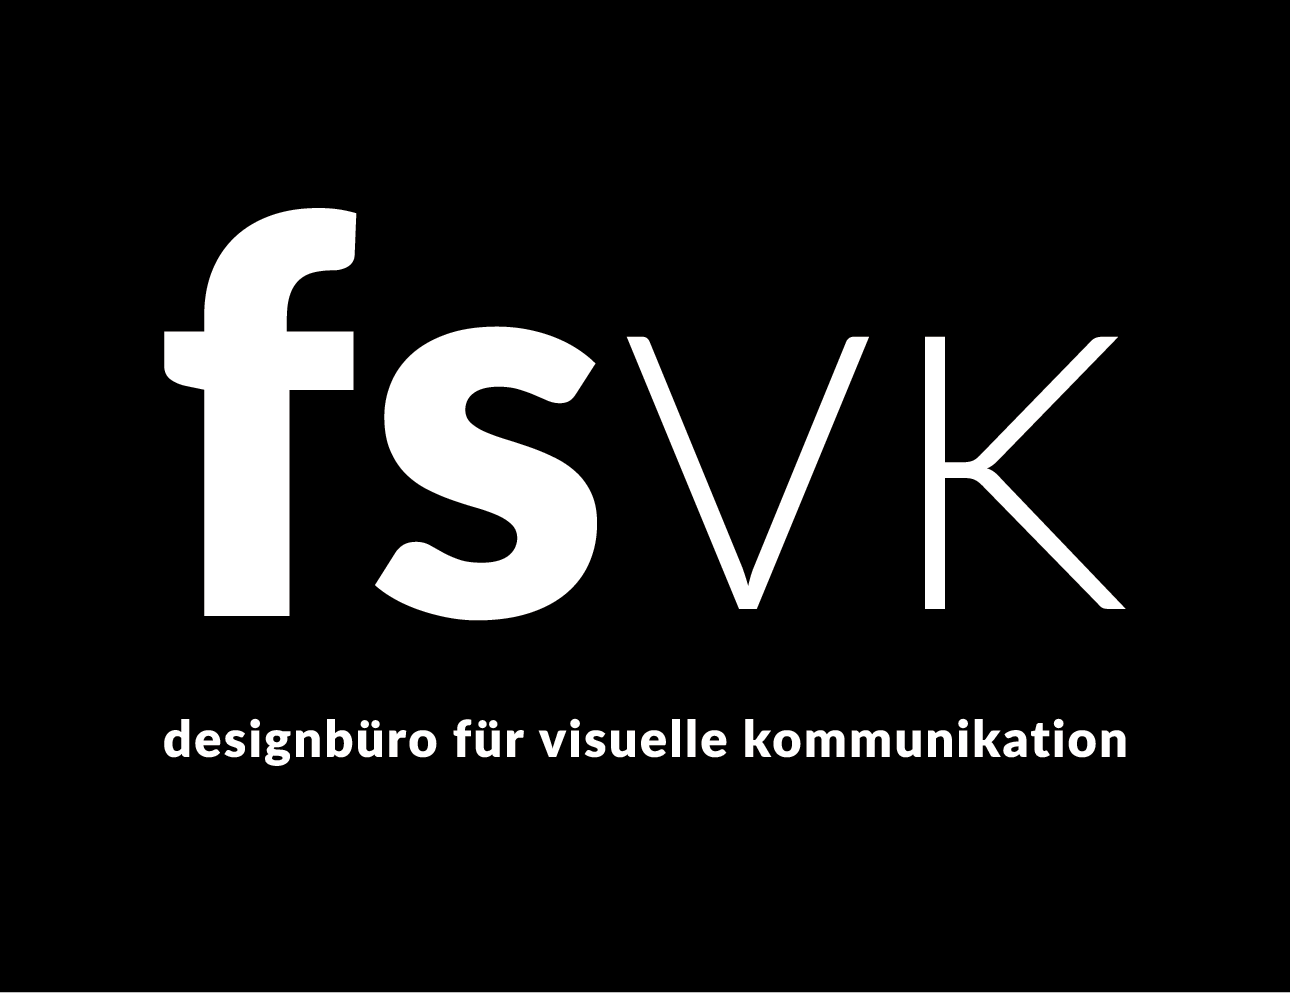 (c) Fsvk.design